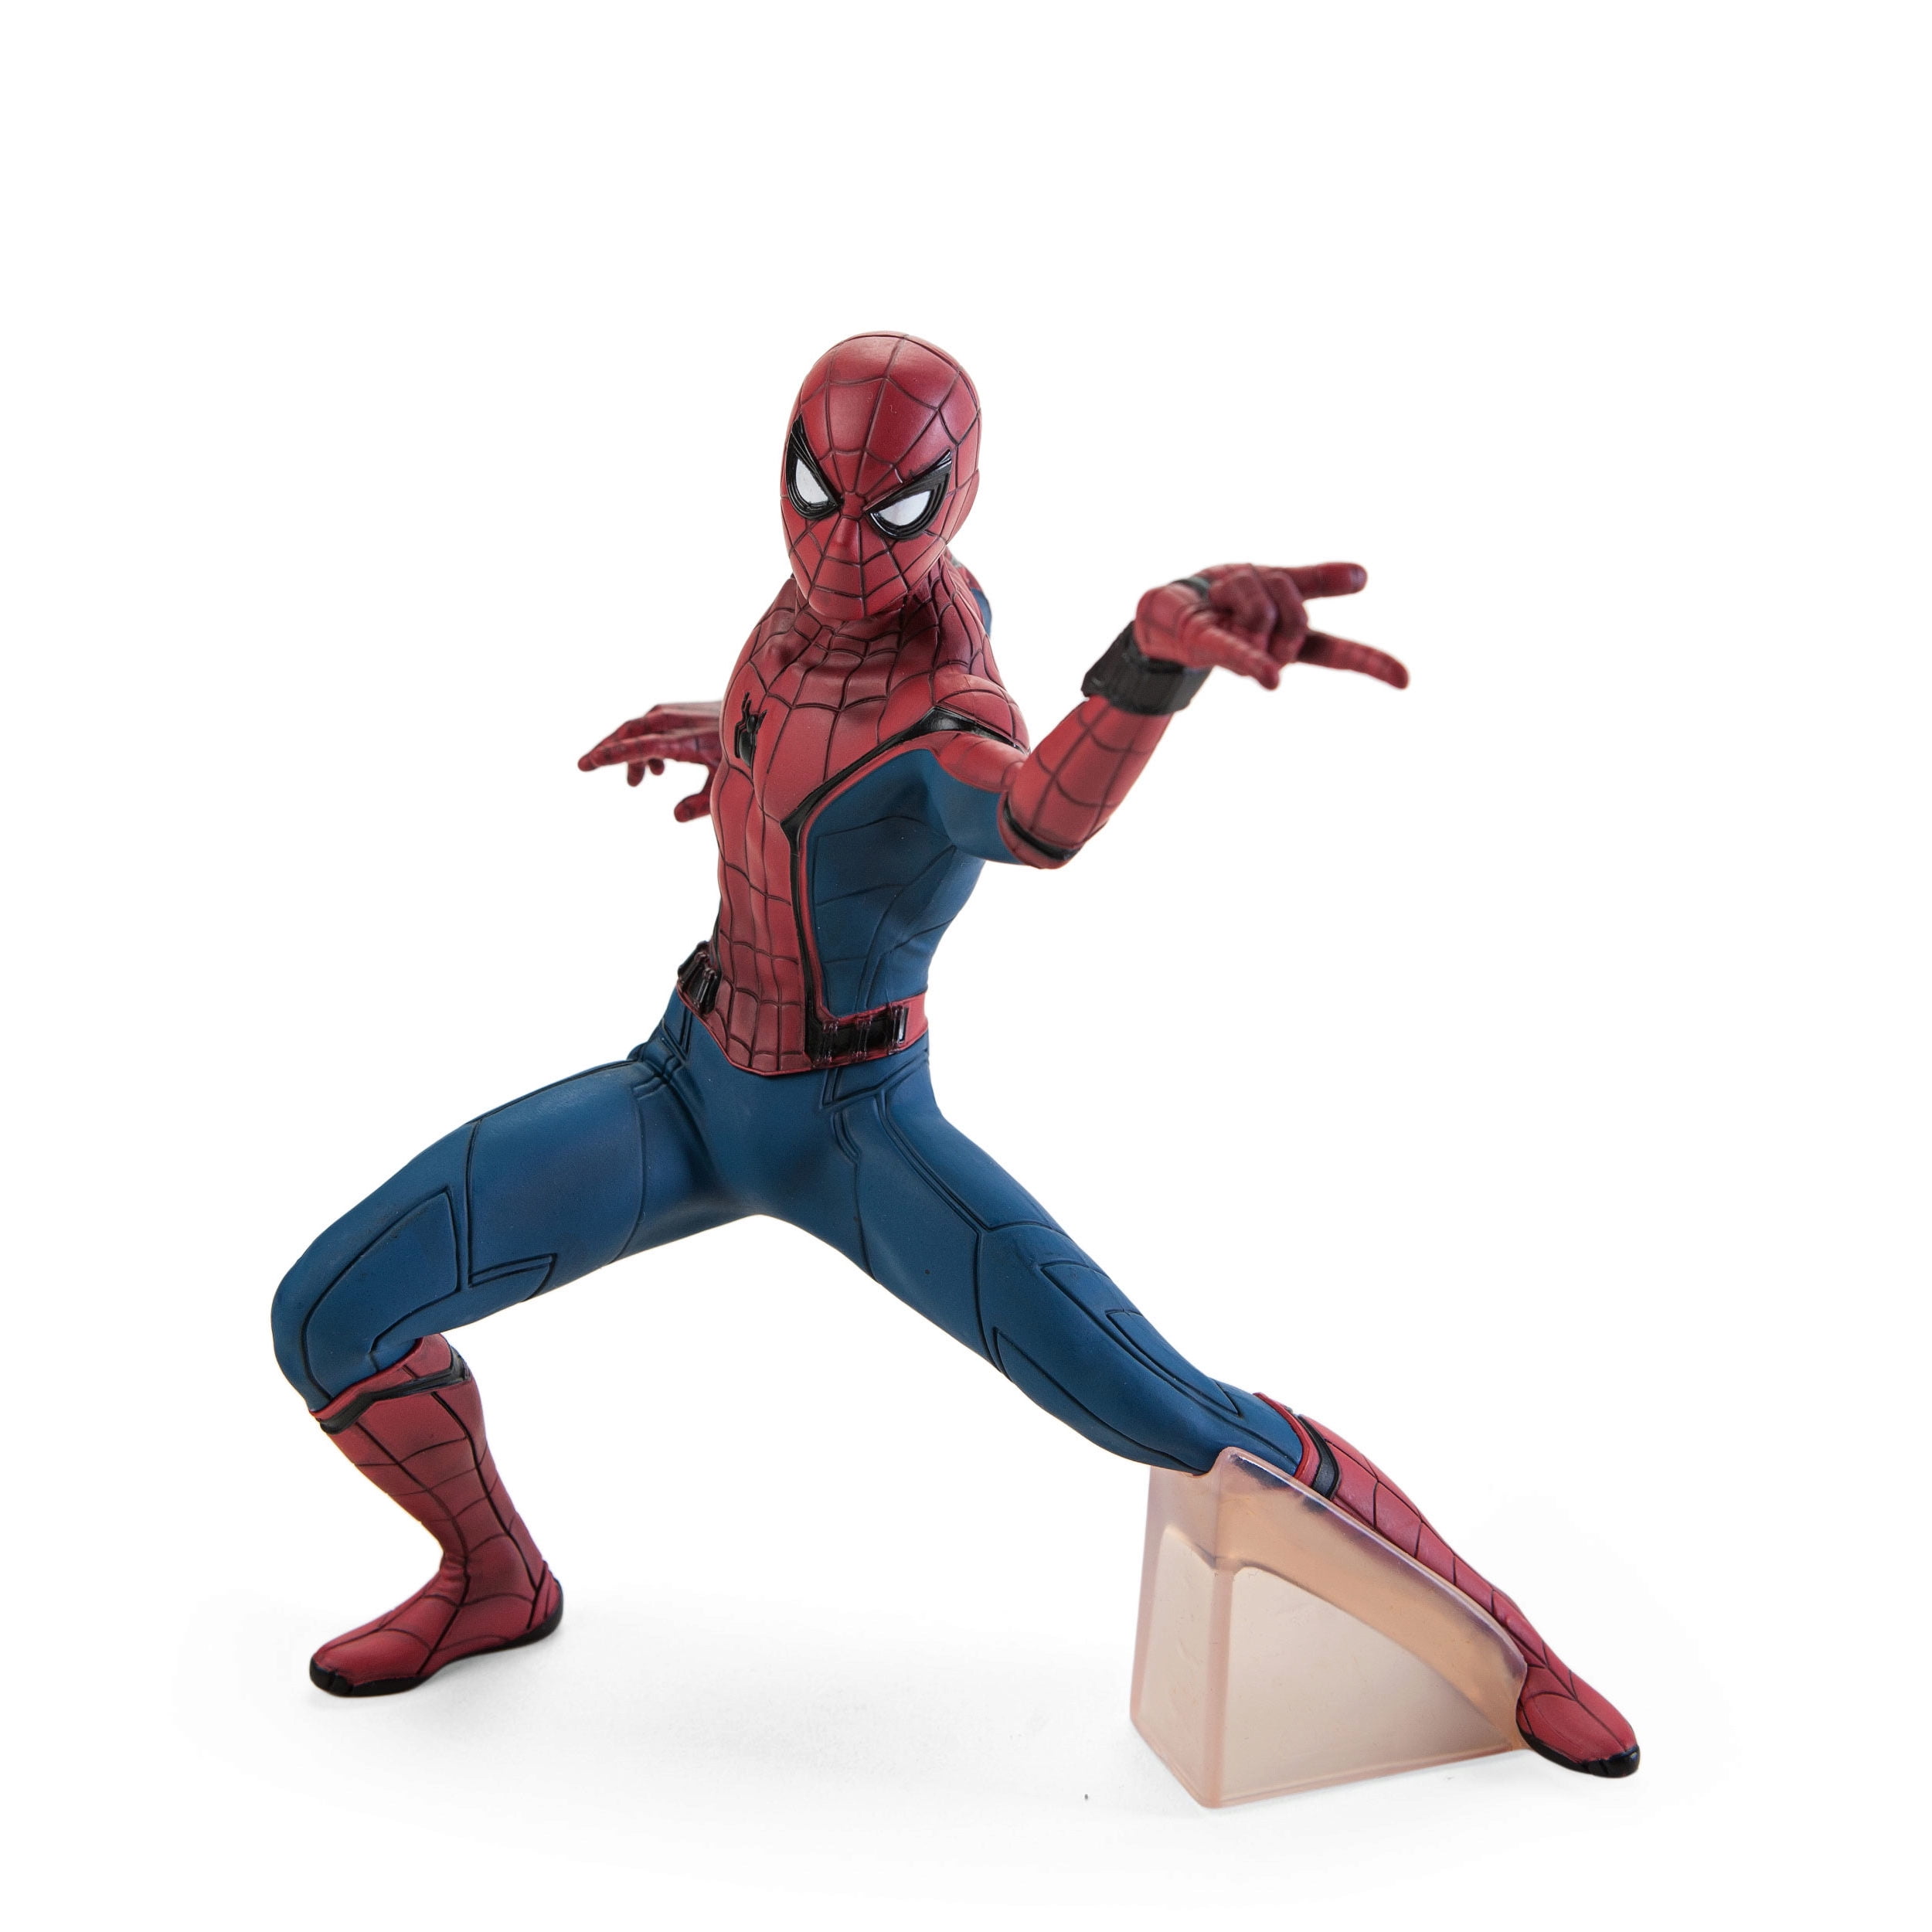 Marvel Superhero Spider-Man Homecoming Spider-Man PVC Figure Statue New In Box